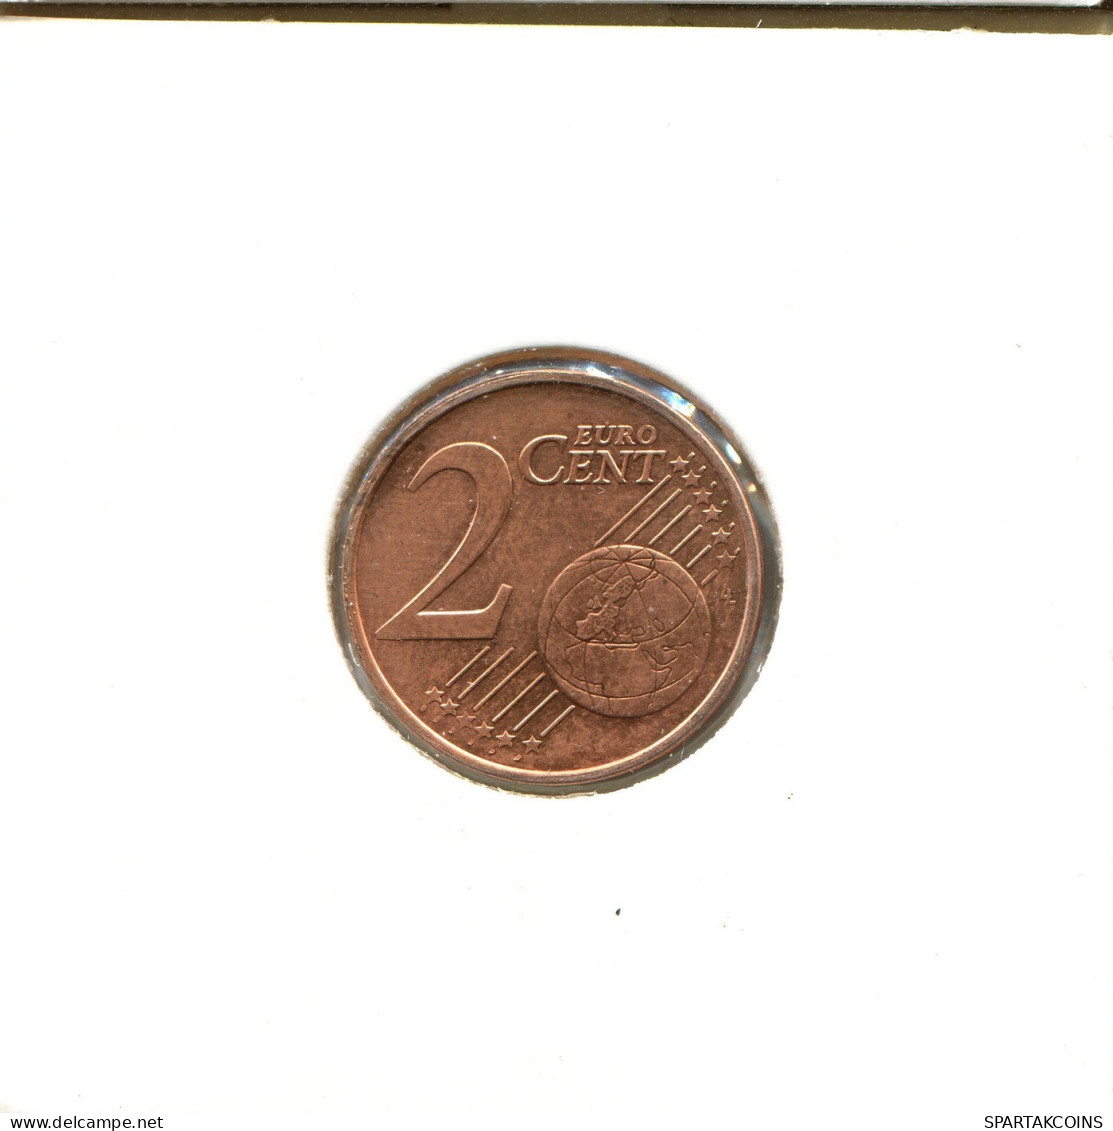 2 EURO CENTS 2008 GRÈCE GREECE Pièce #EU177.F.A - Greece